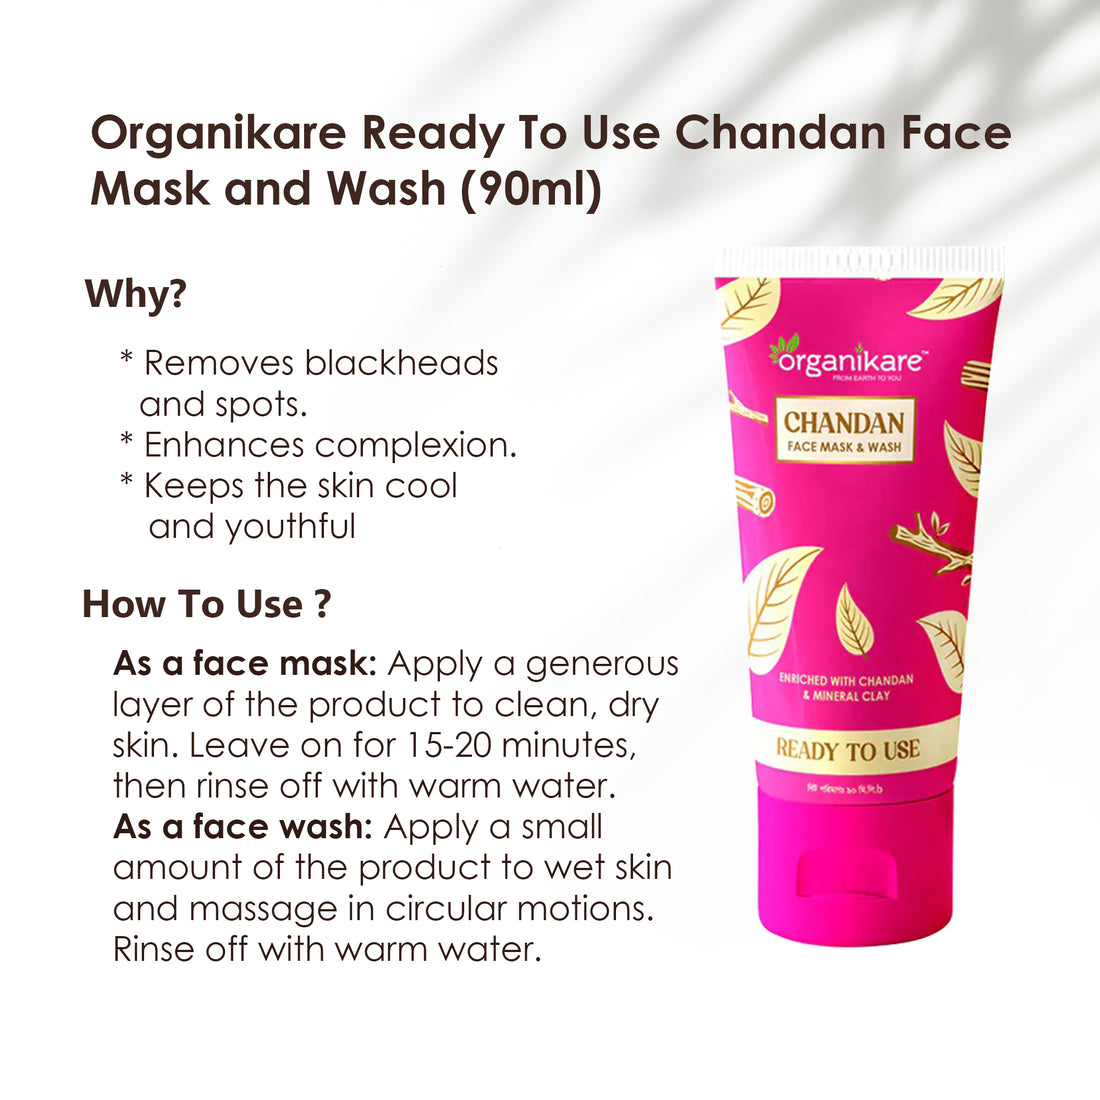 Organikare Ready To Use Chandan Face Mask and Wash (90ml)